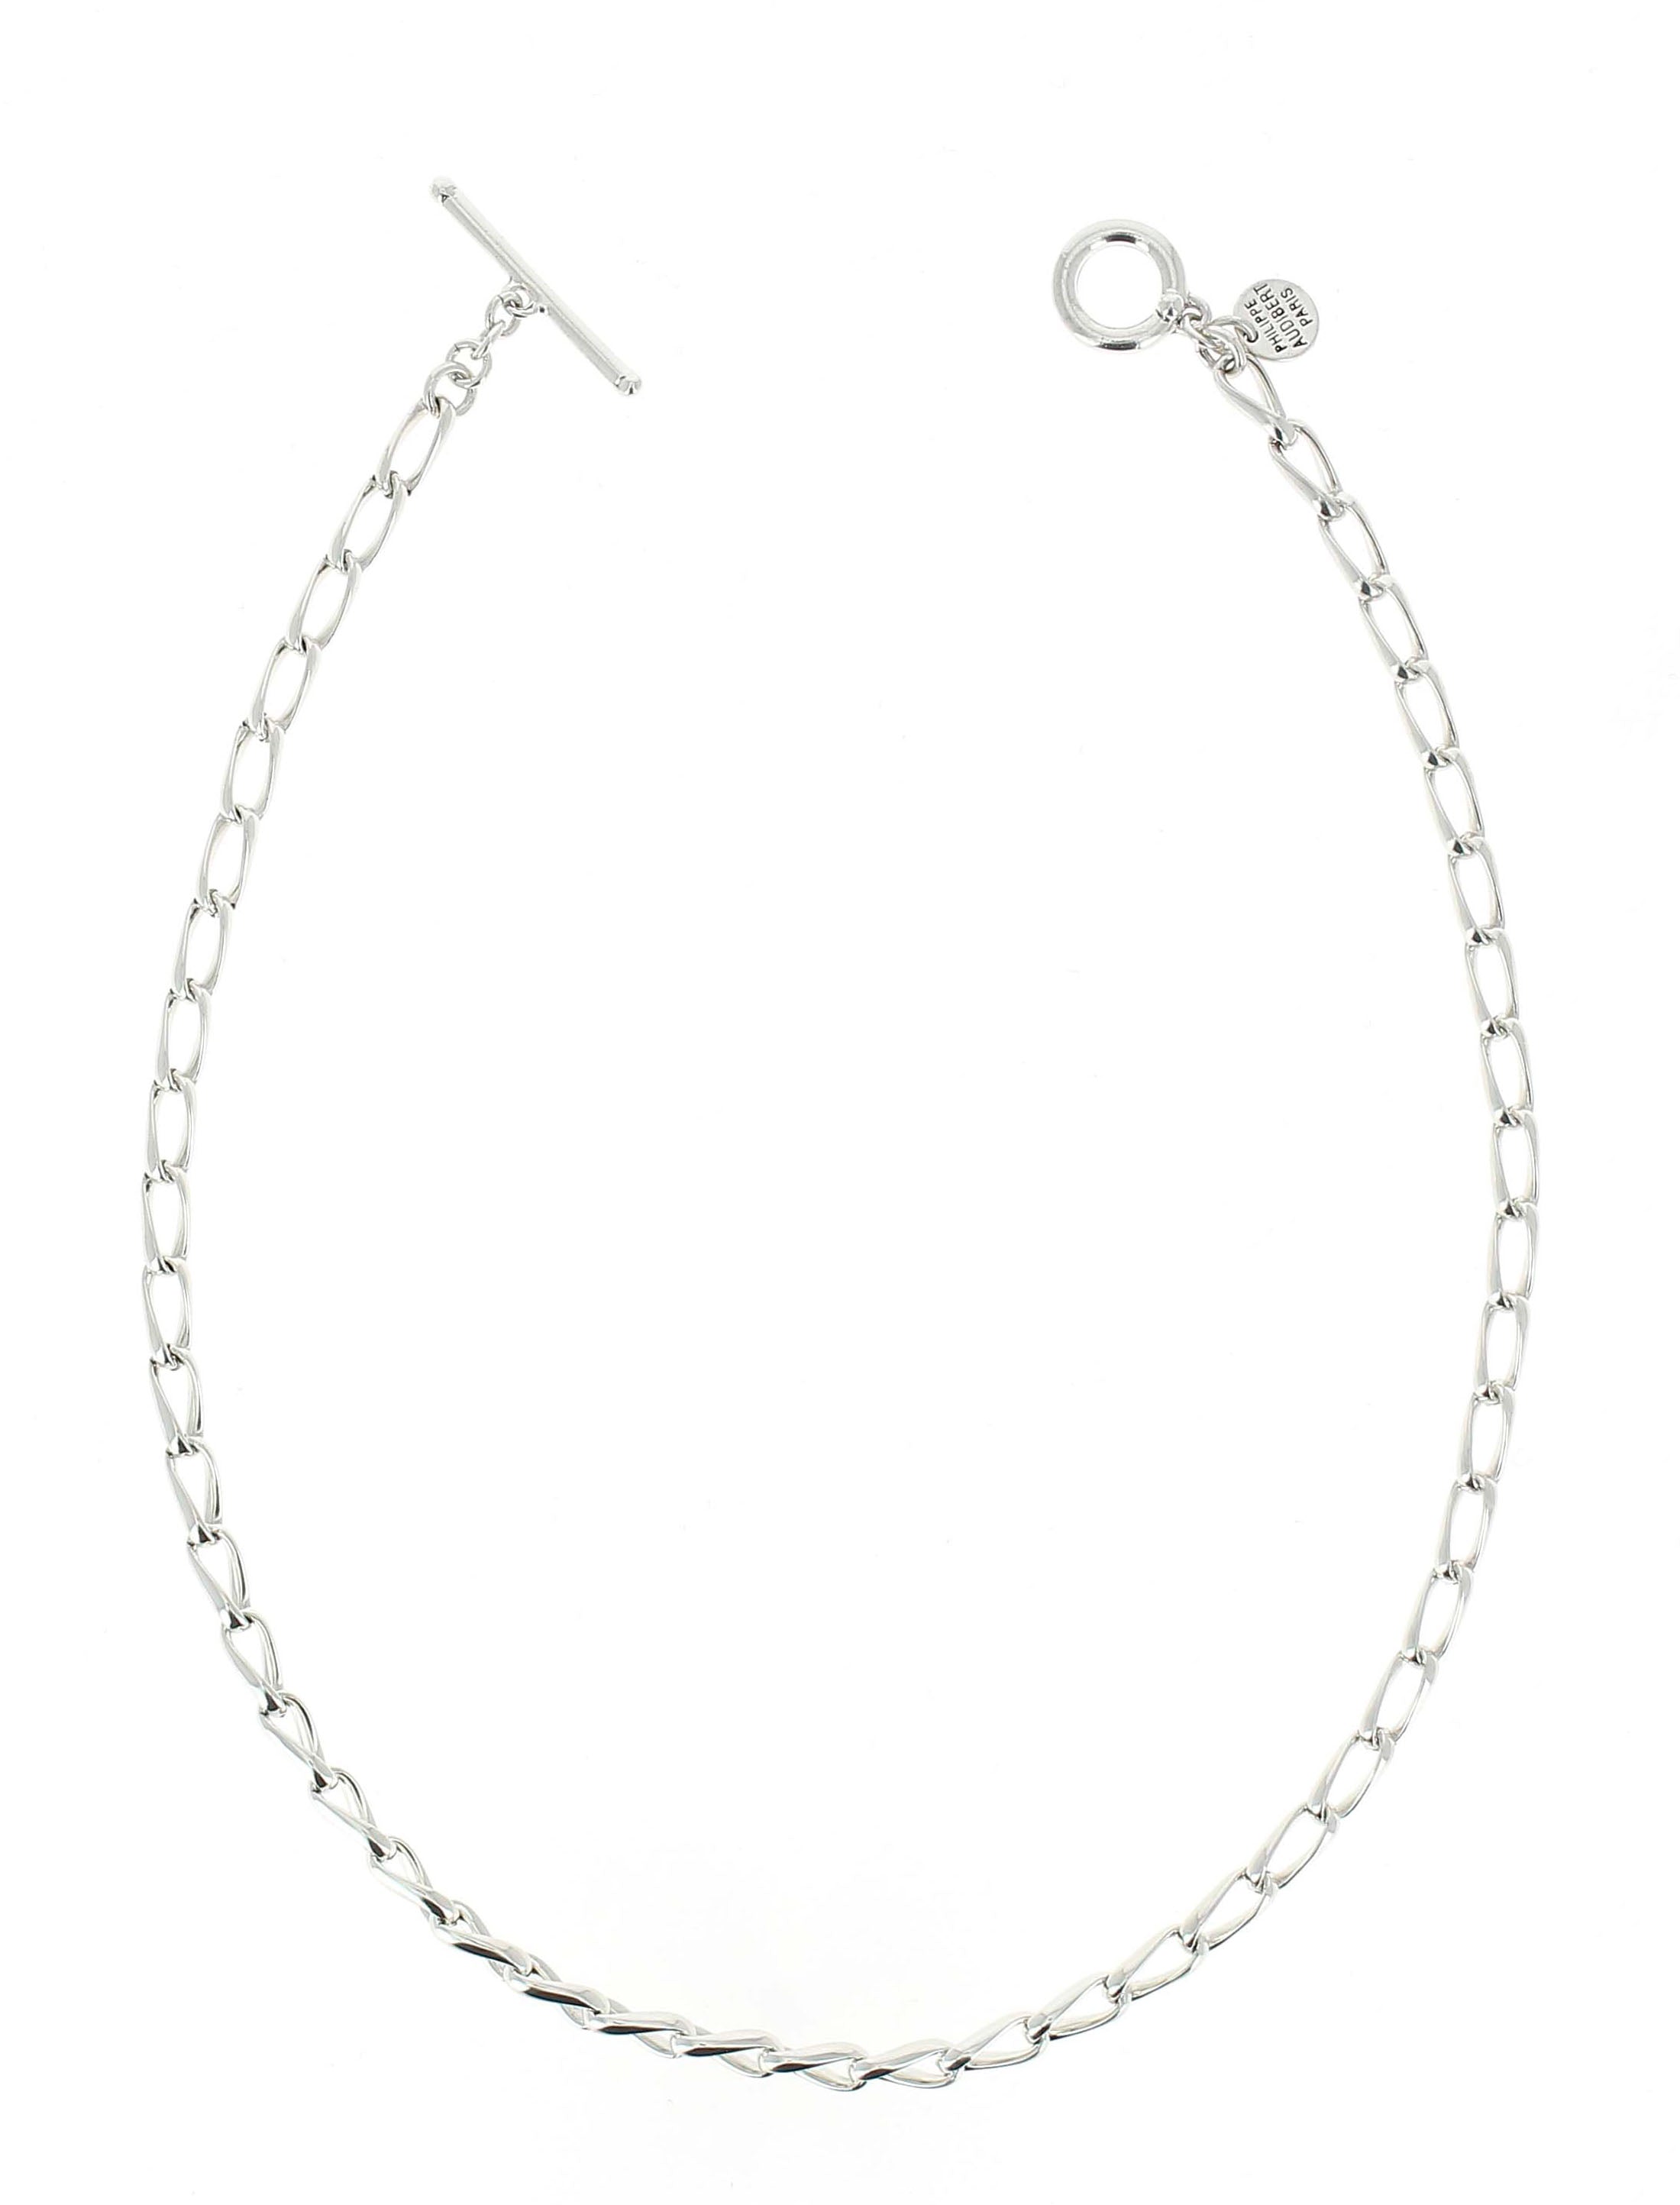 〔Philippe Audibert〕Paco chain necklace